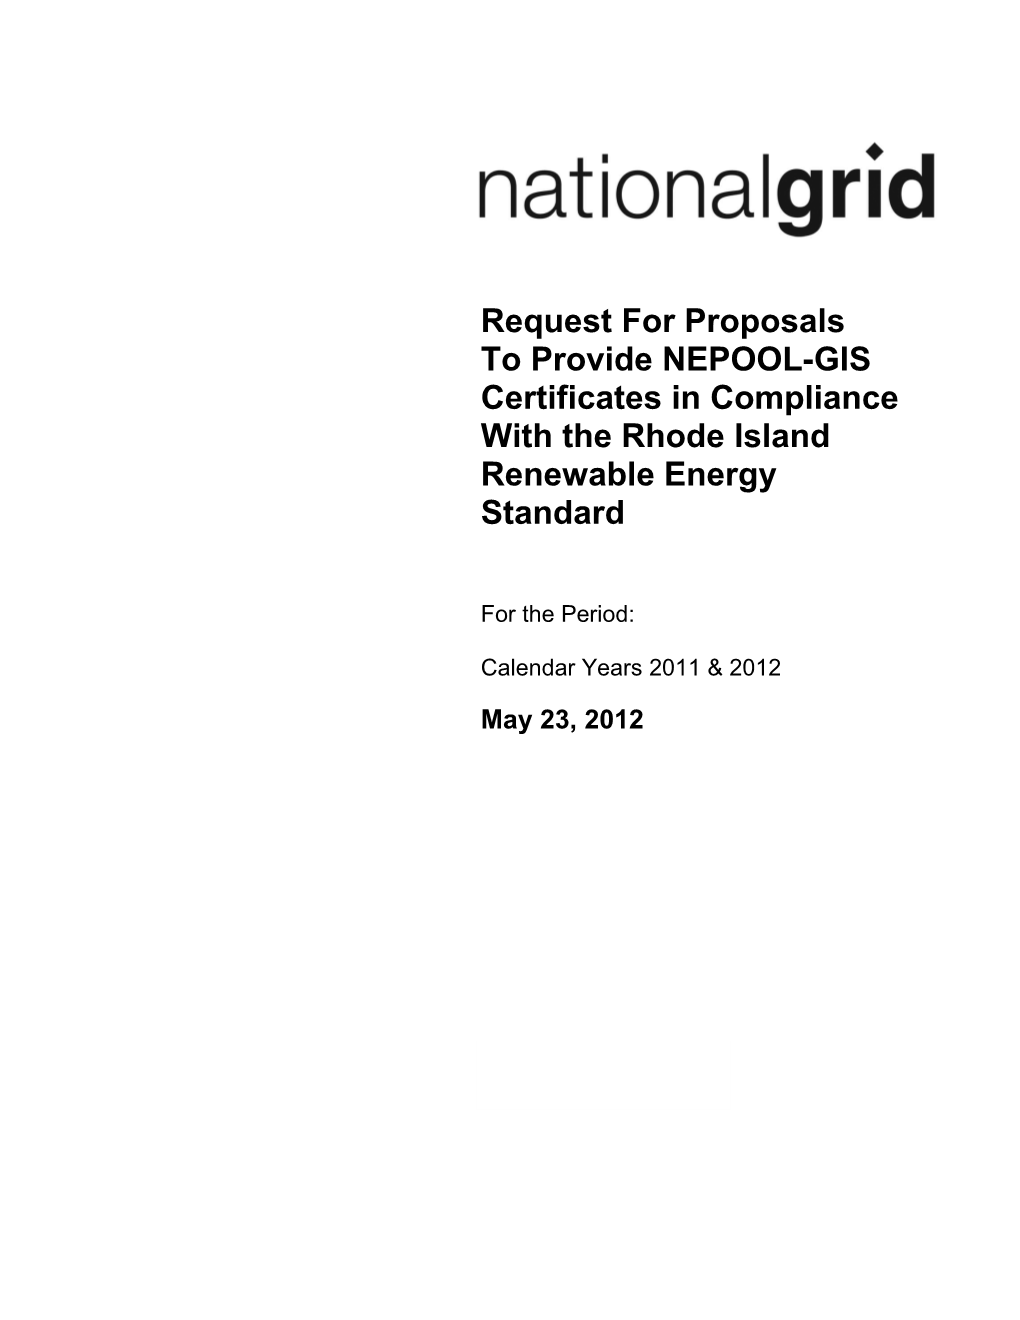 To Providenepool-GIS Certificates in Compliance with Therhode Islandrenewable Energy Standard